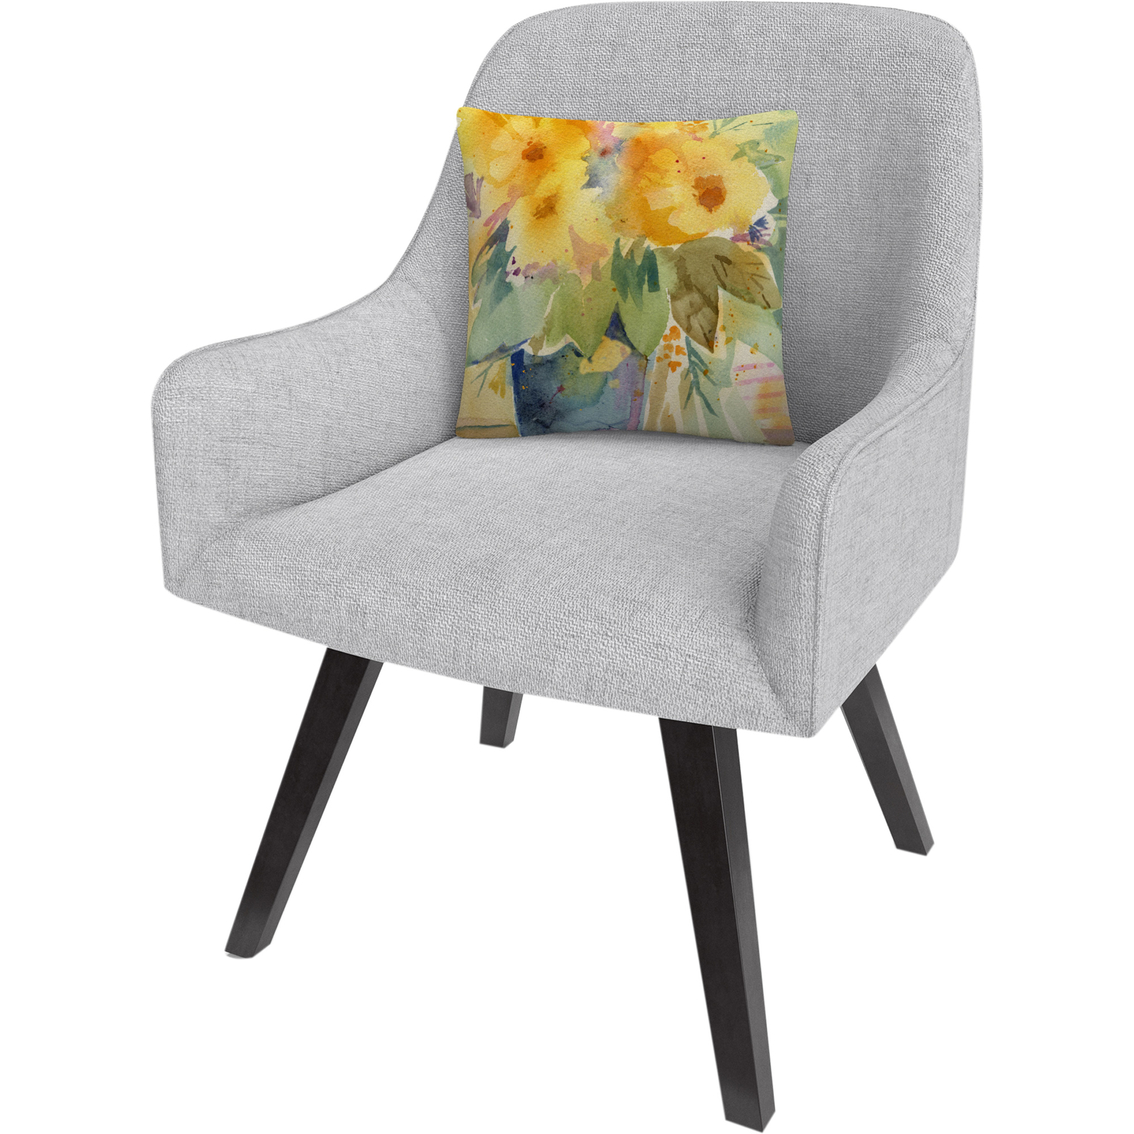 Trademark Fine Art Yellow Floral Vase Decorative Throw Pillow - Image 2 of 2